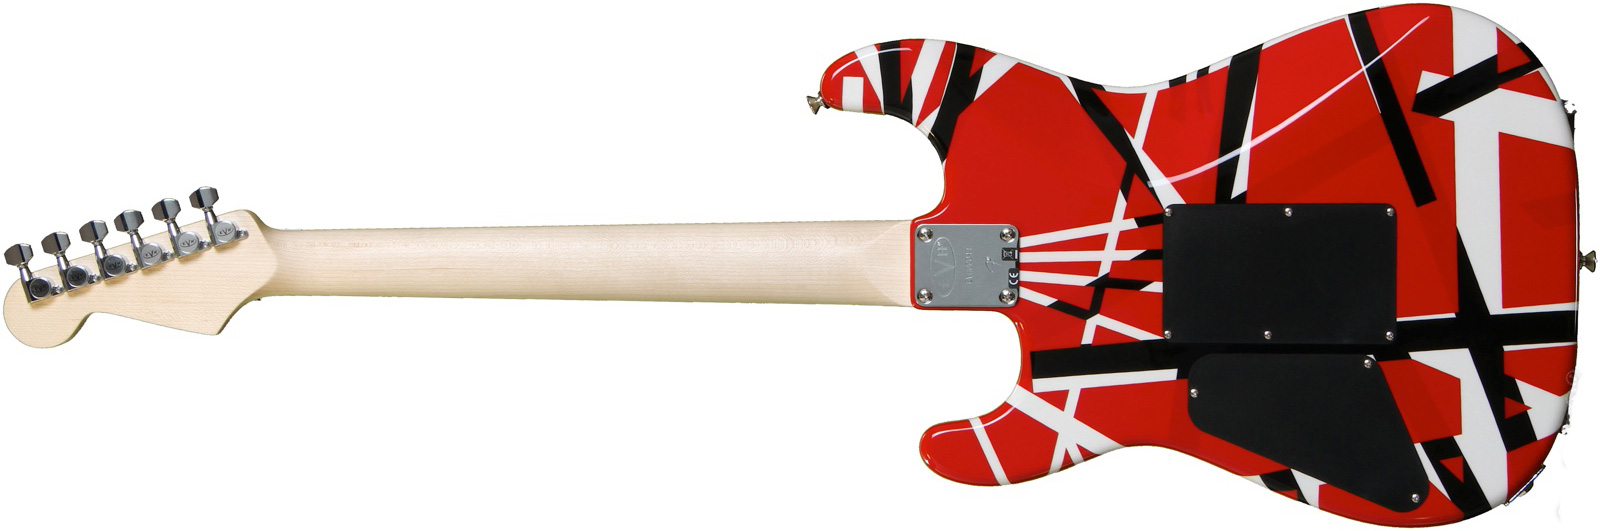 Evh Striped Series - Red With Black Stripes - Guitare Électrique Forme Str - Variation 3